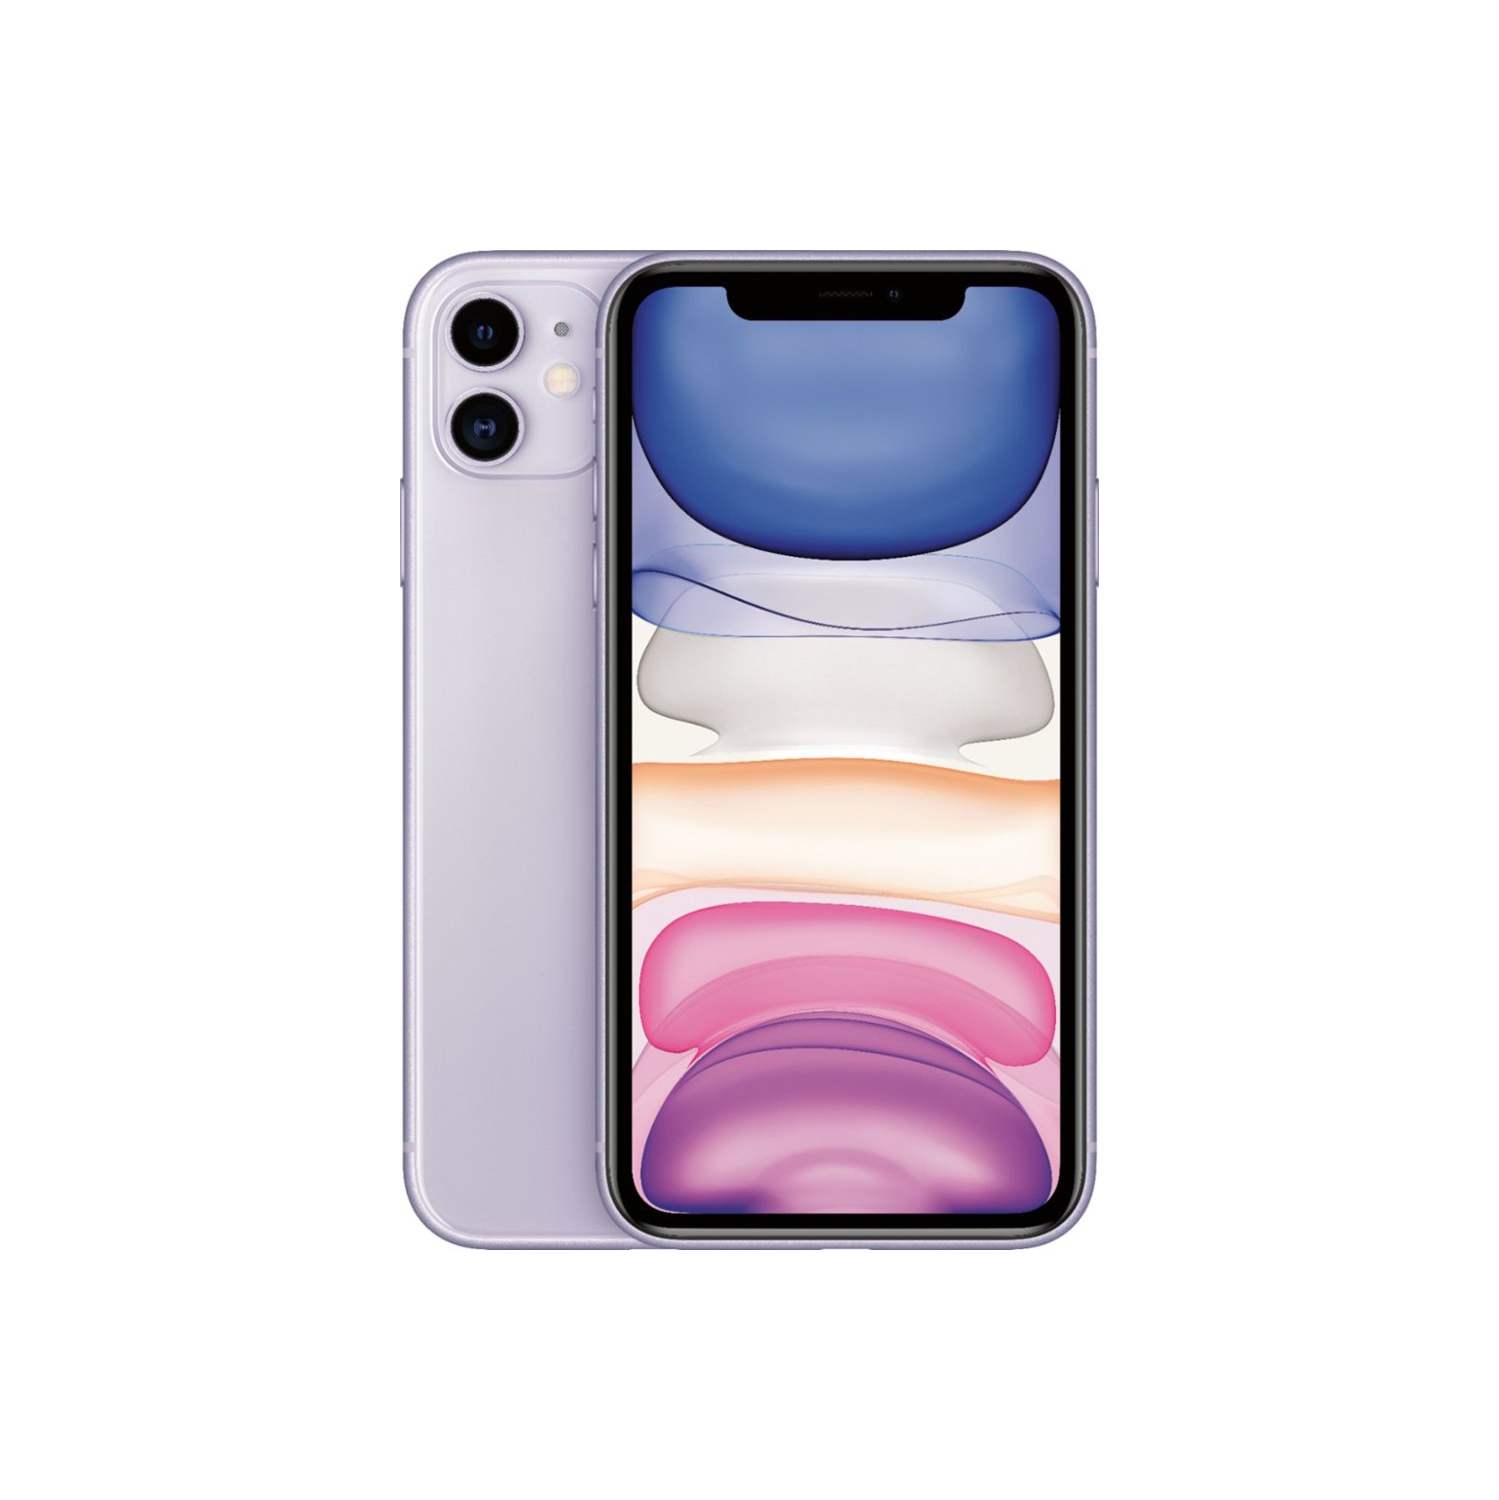 Refurbished (Excellent) - Apple iPhone 11 256GB Smartphone - Purple - Unlocked - Certified Refurbished